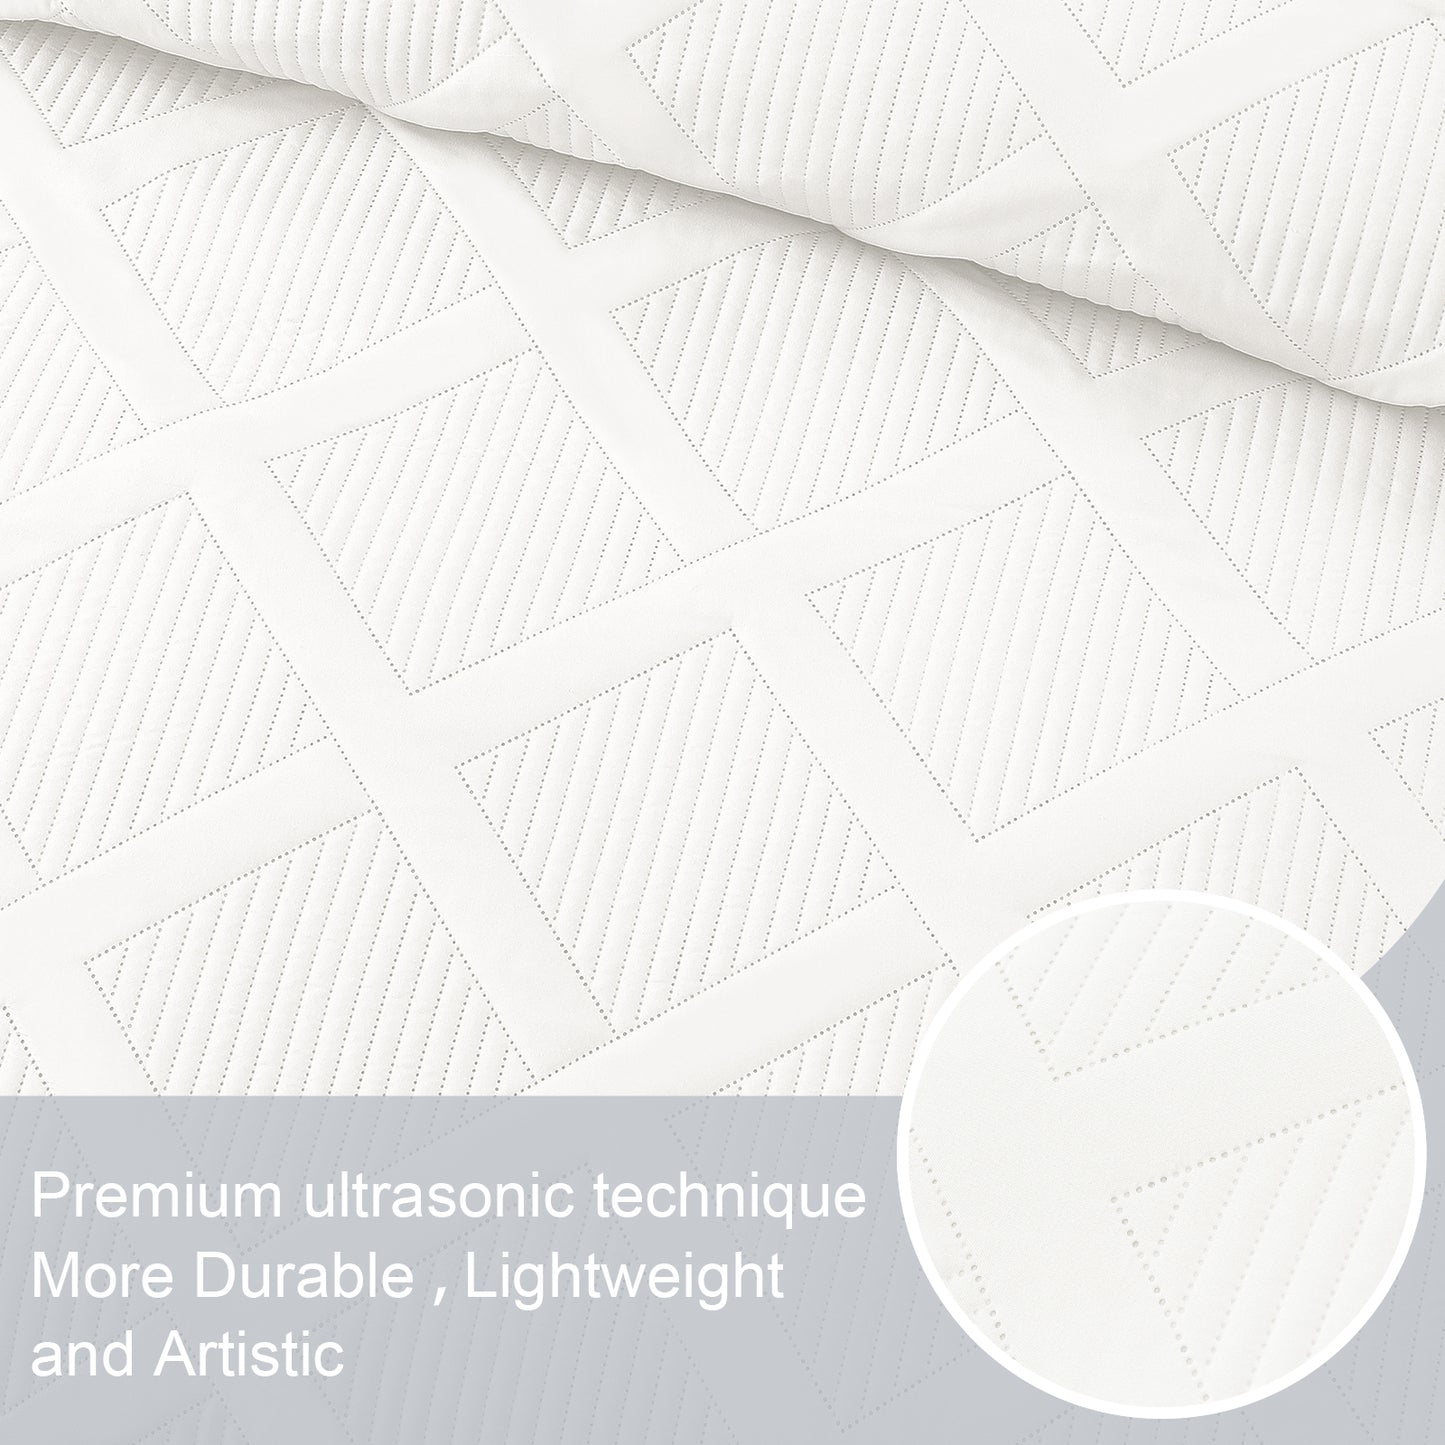 Exclusivo Mezcla Ultrasonic Twin/ Twin XL Quilt Set, Lightweight Bedspreads Modern Striped Coverlet with 1 Pillow Sham, White